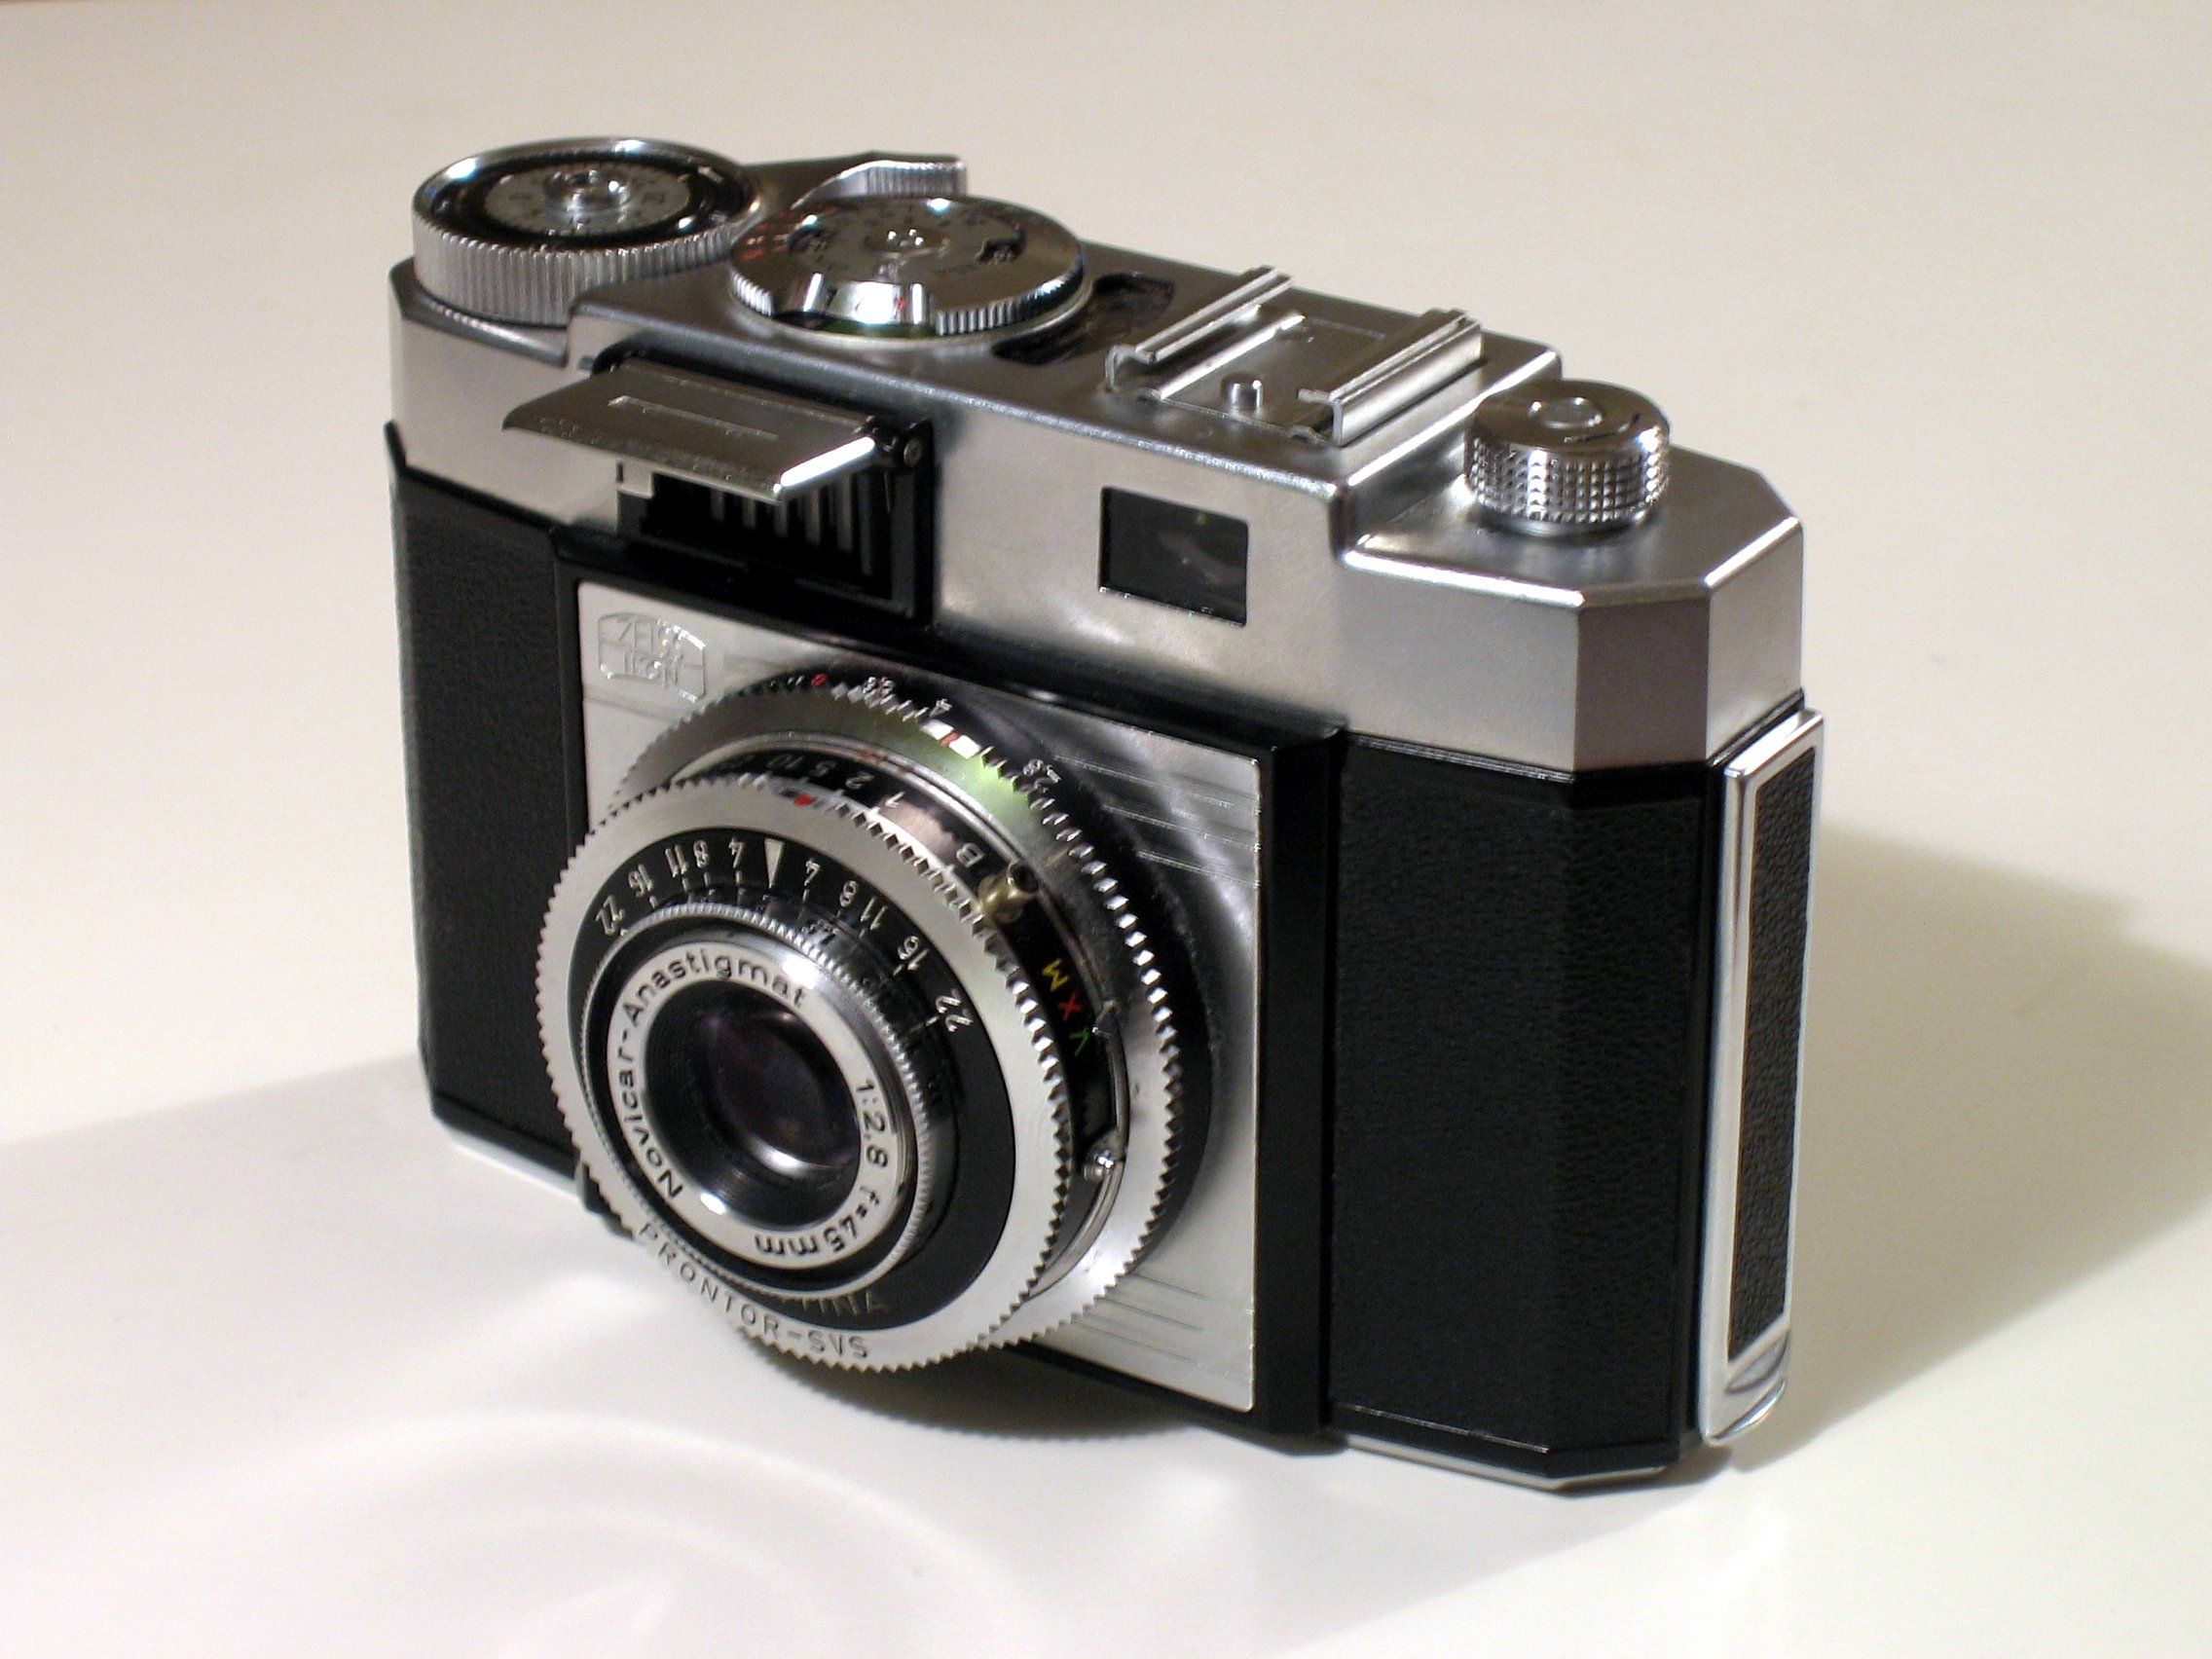 old cameras - Google Search | cammeras | Pinterest | Cameras ...